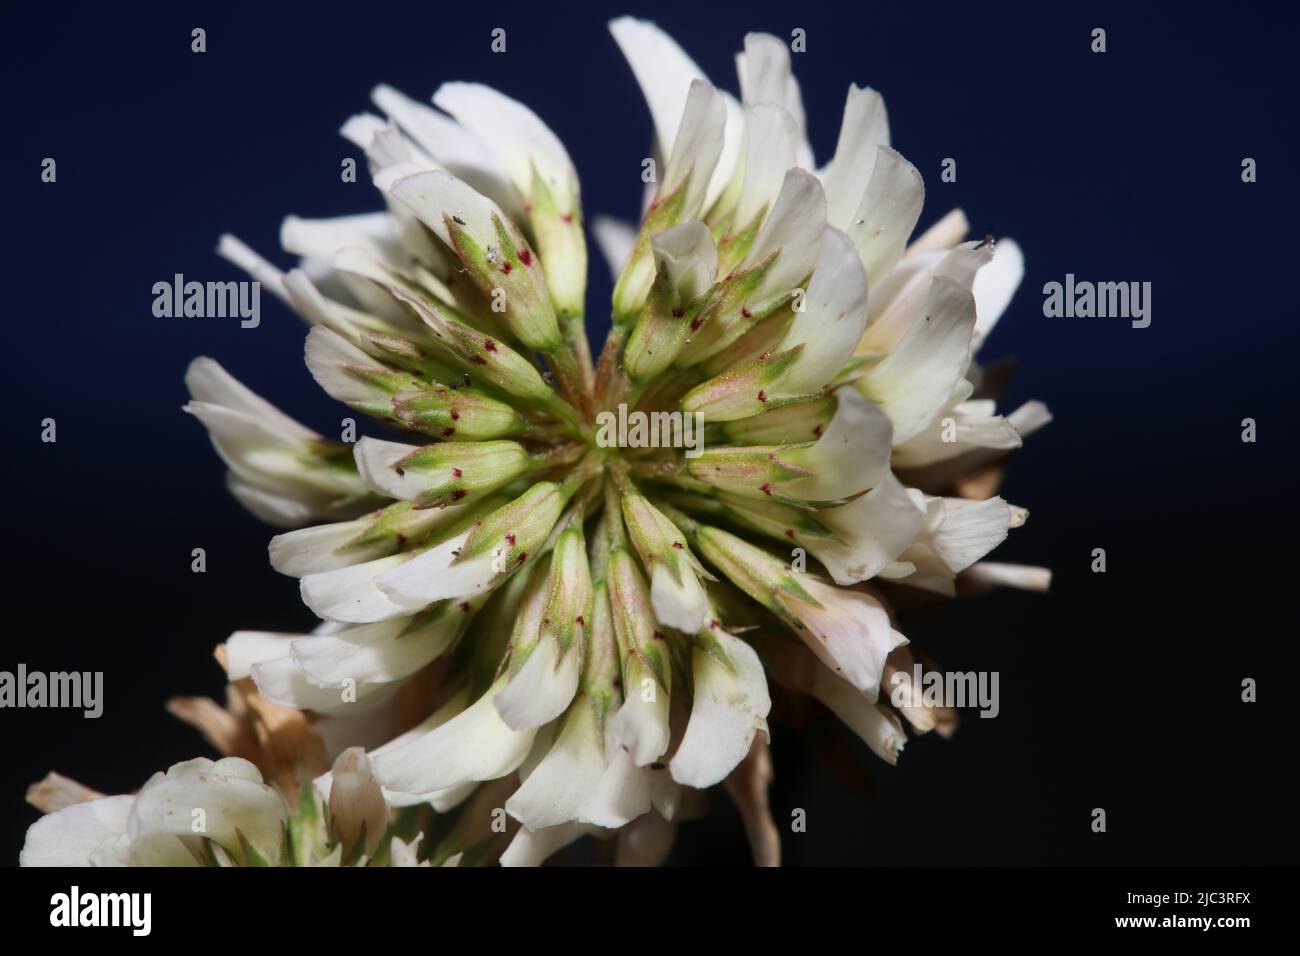 White wild flower blossom close up botanical background Trifolium alexandrinum family leguminosae high quality big size prints Stock Photo